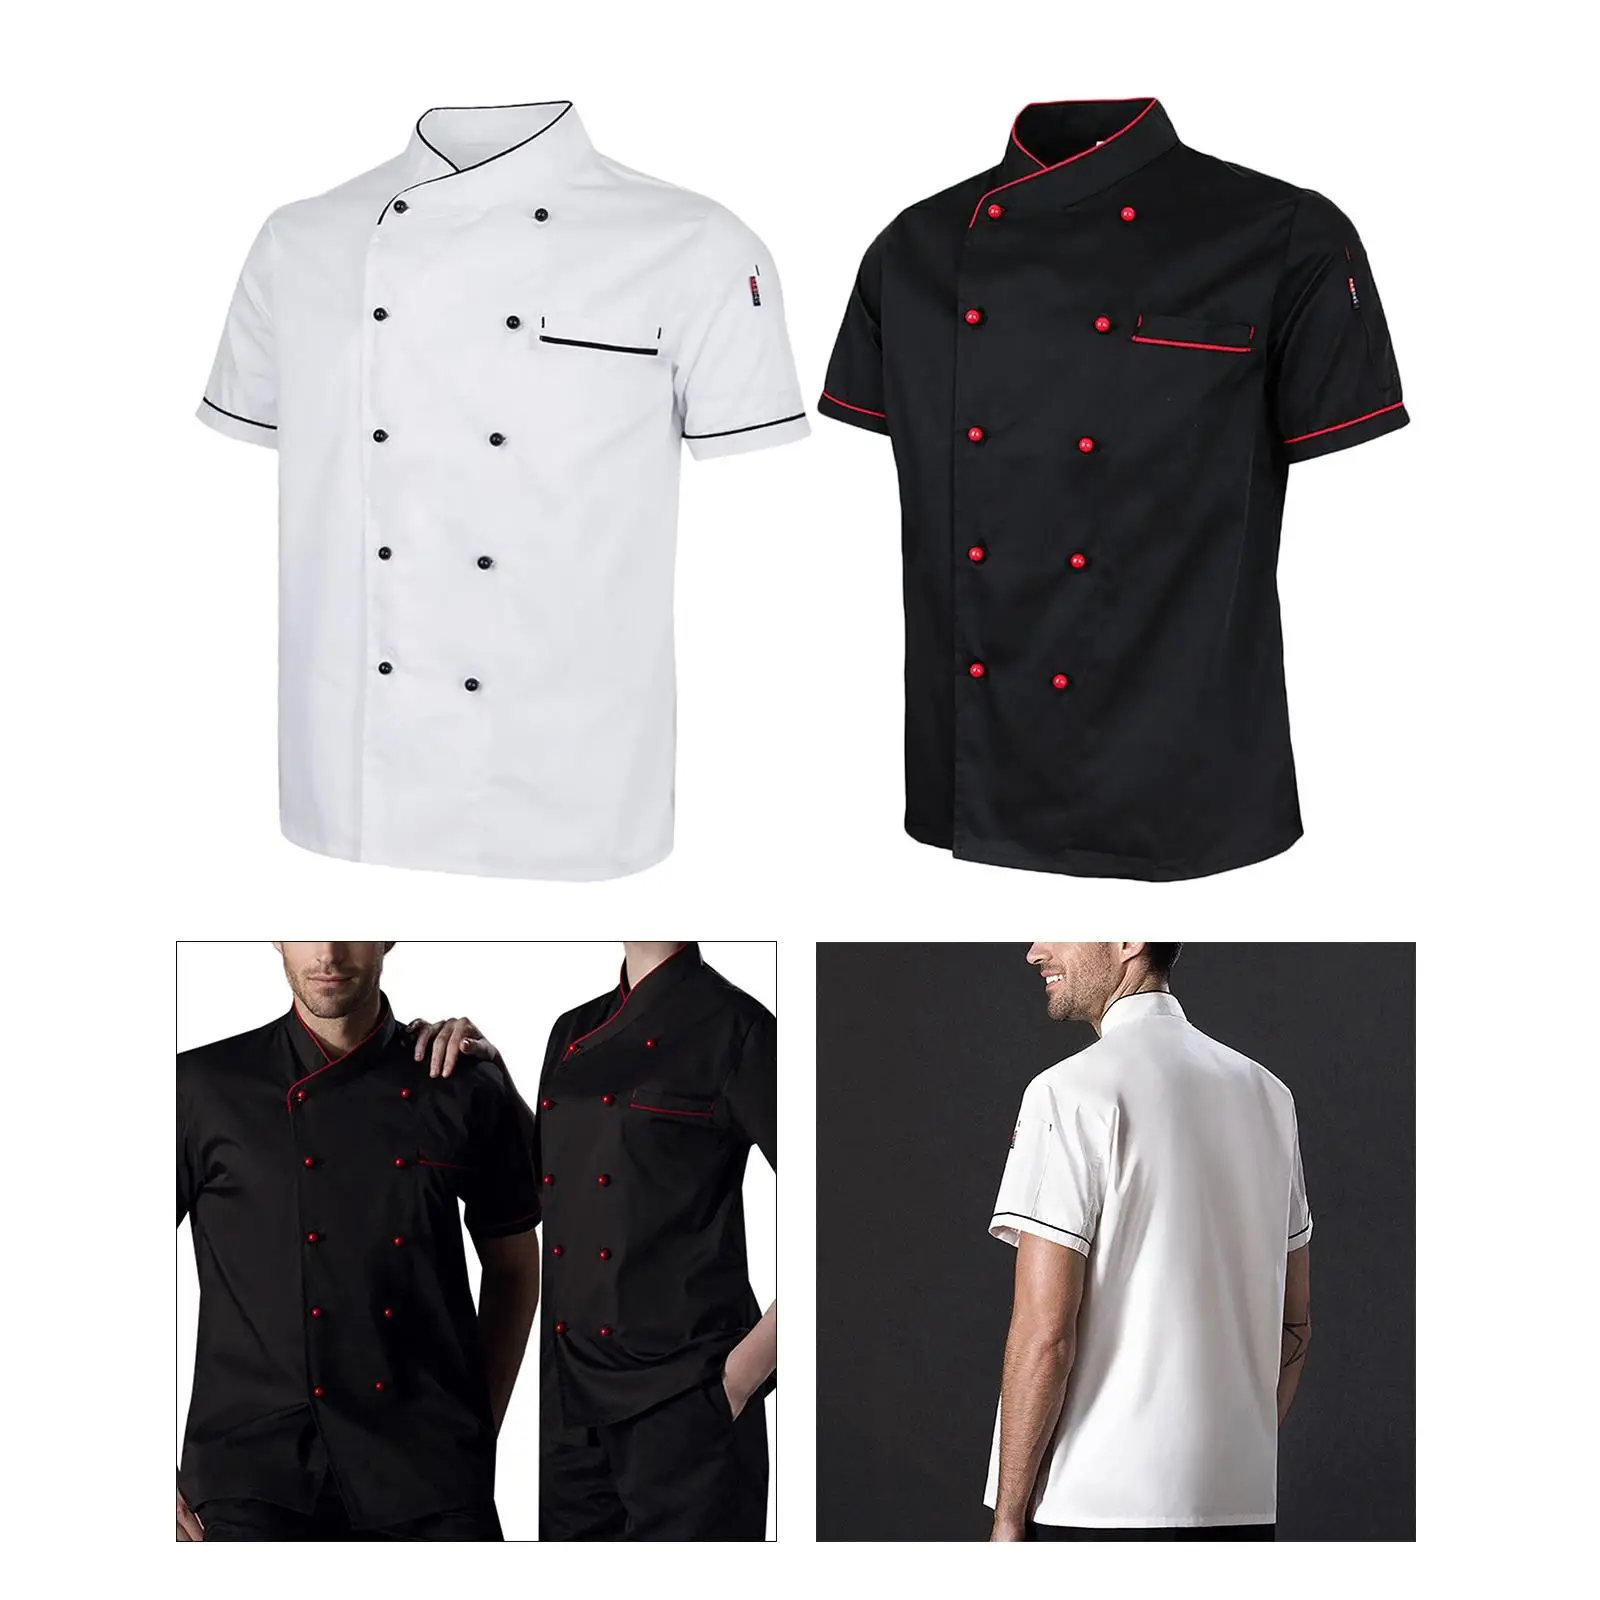 Unisex Chef Jacket Food Service Short Sleeve Top Executive Uniform for Hotel